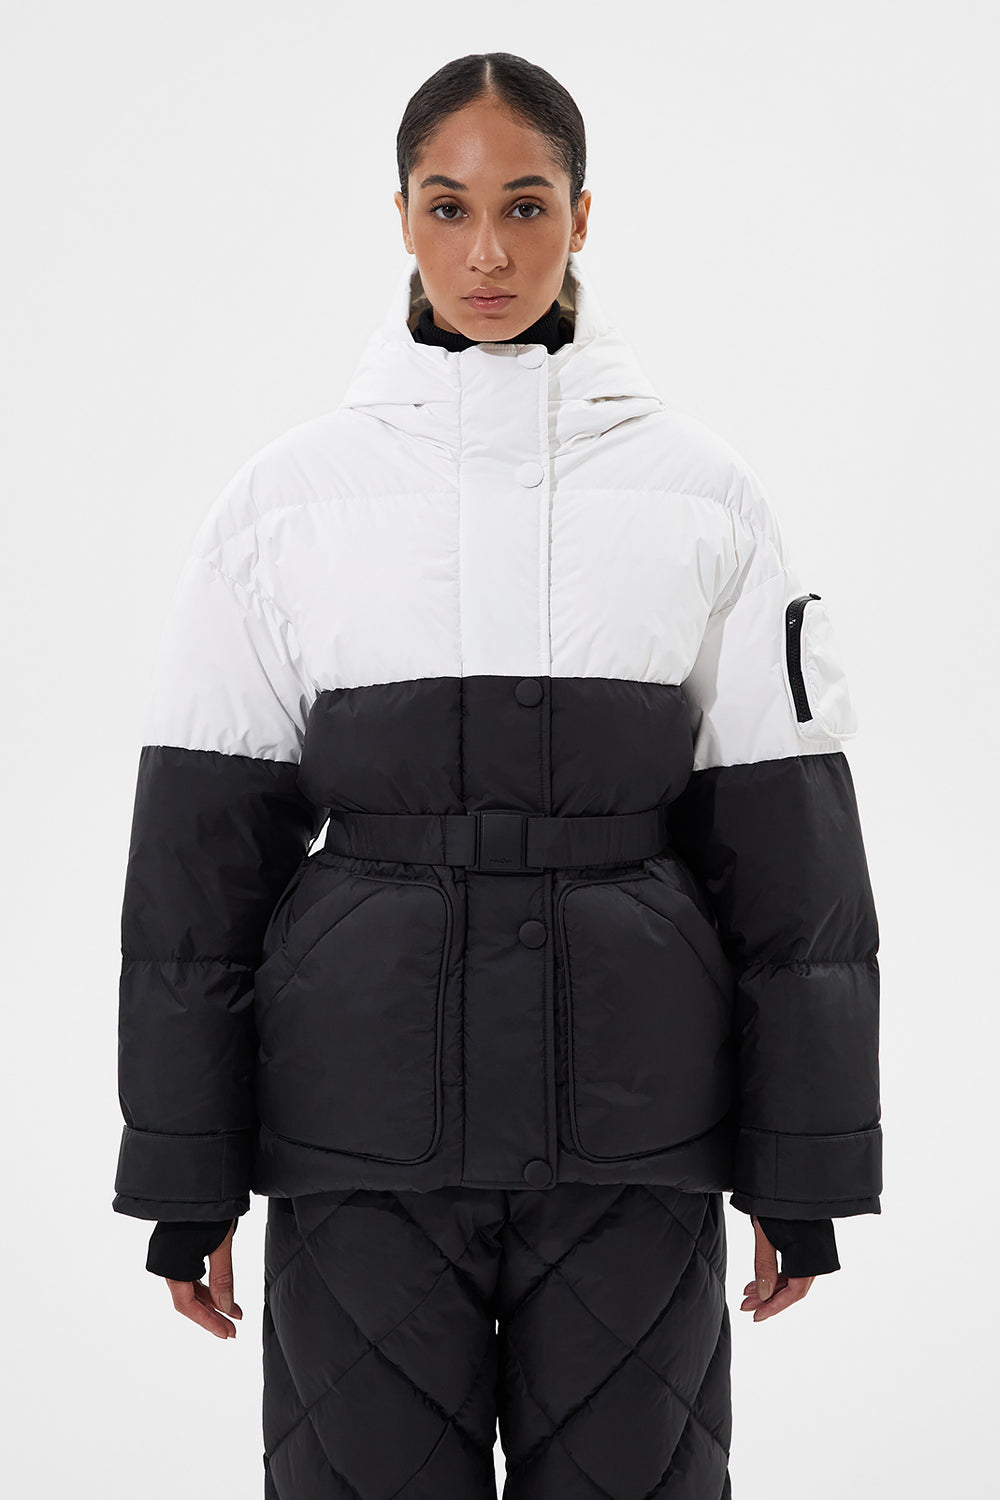 Apres Ski Michlin Jacket Tec White + Tec Black